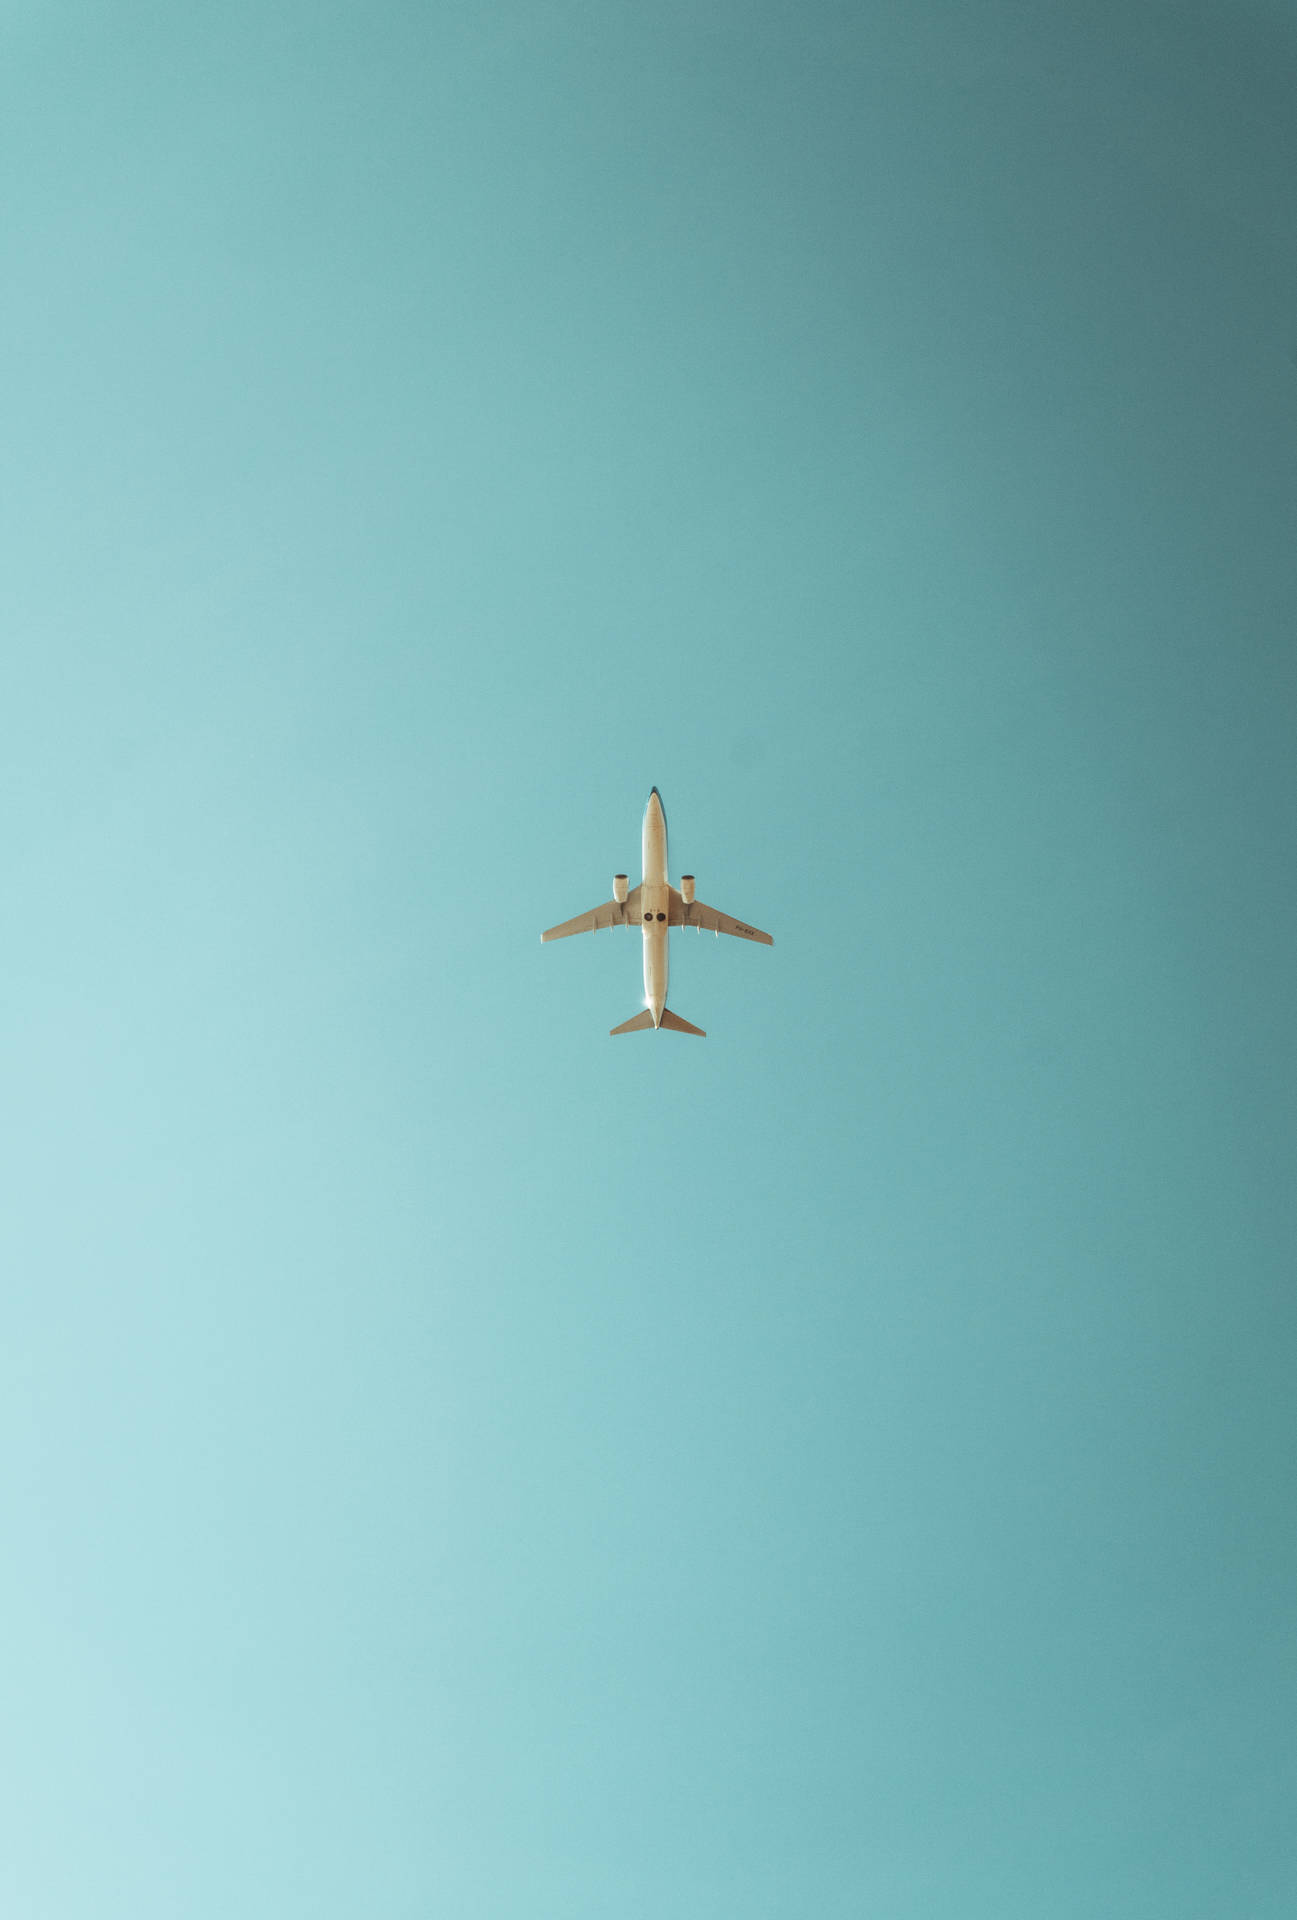 Minimalistisk Flyvemaskine Iphone Wallpaper